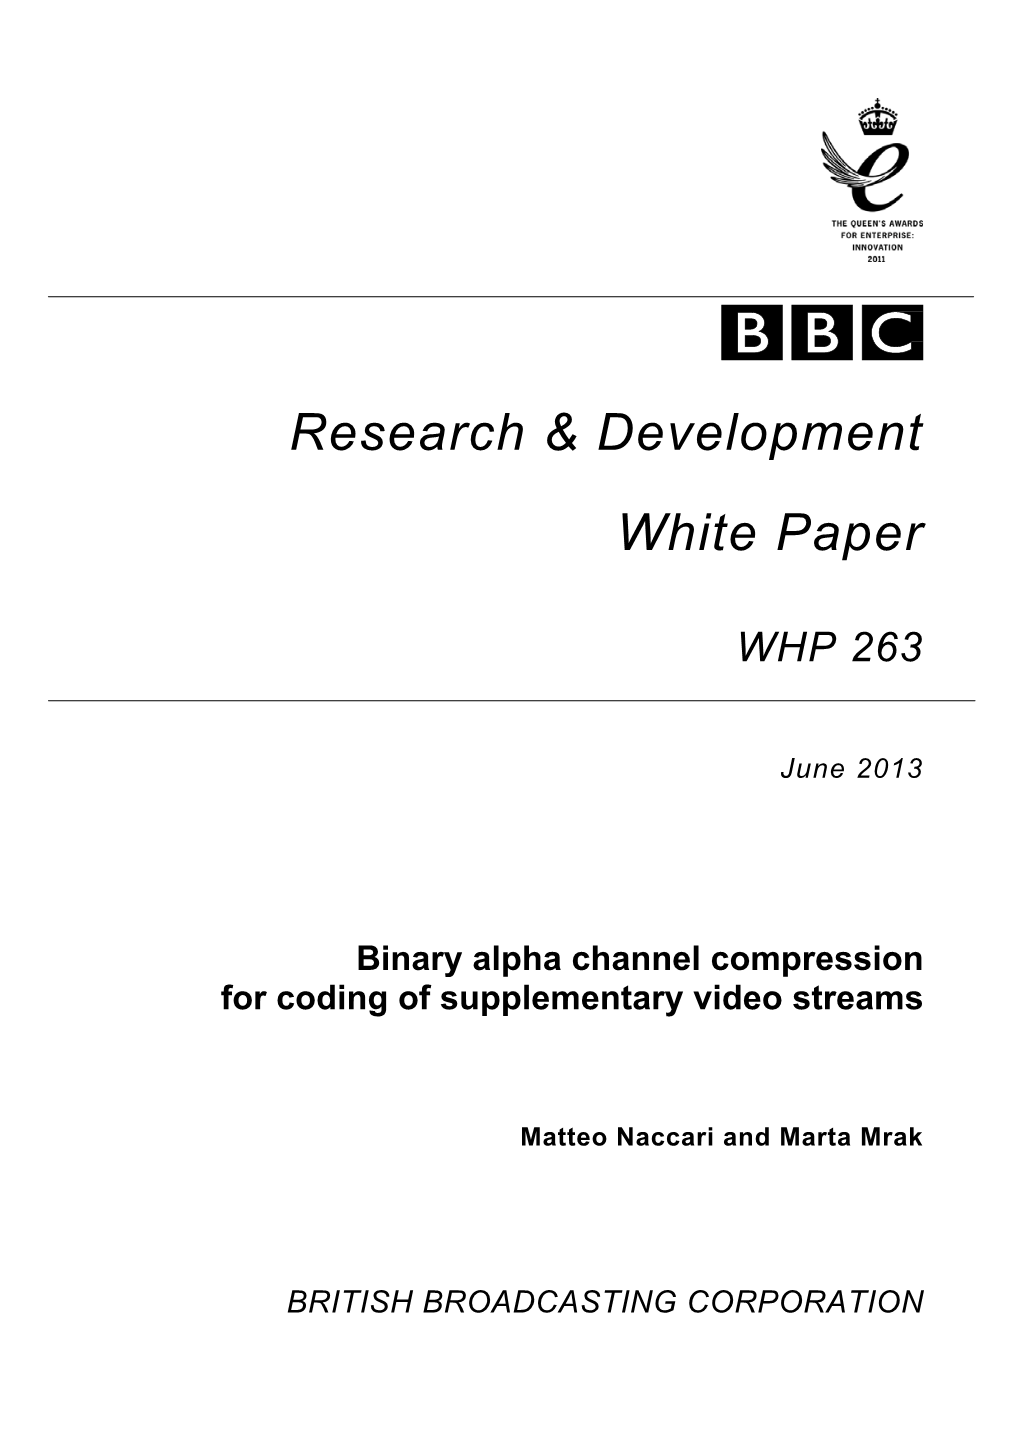 BBC R&D White Paper WHP263